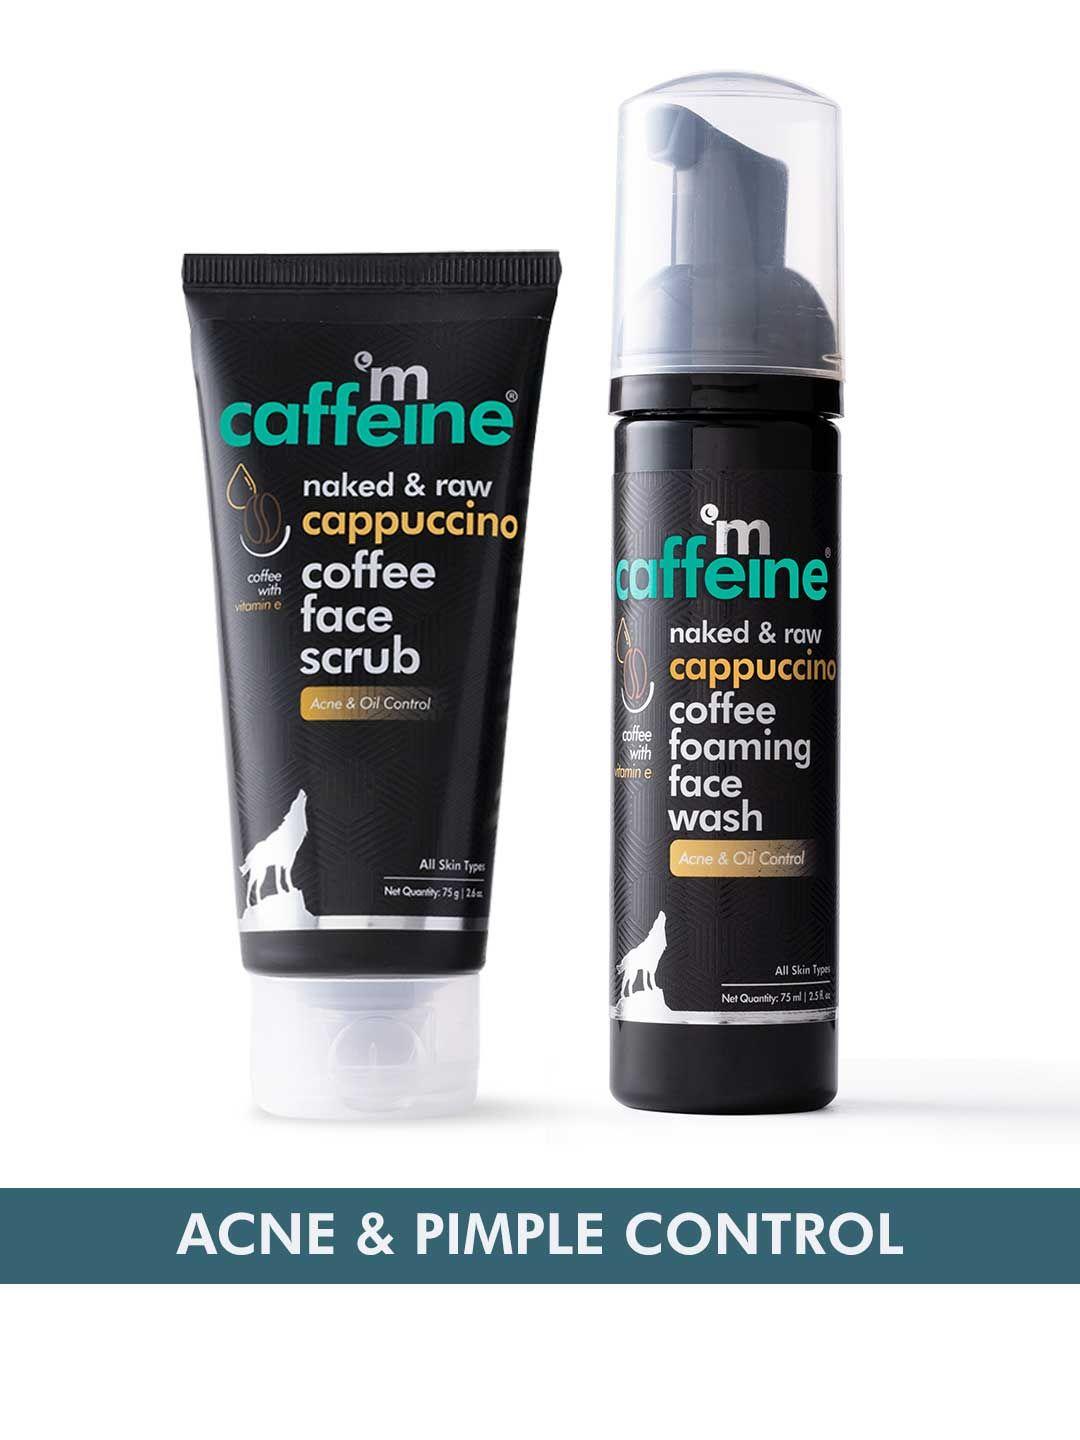 mcaffeine foaming face wash & face scrub combo for acne & pimple controlling